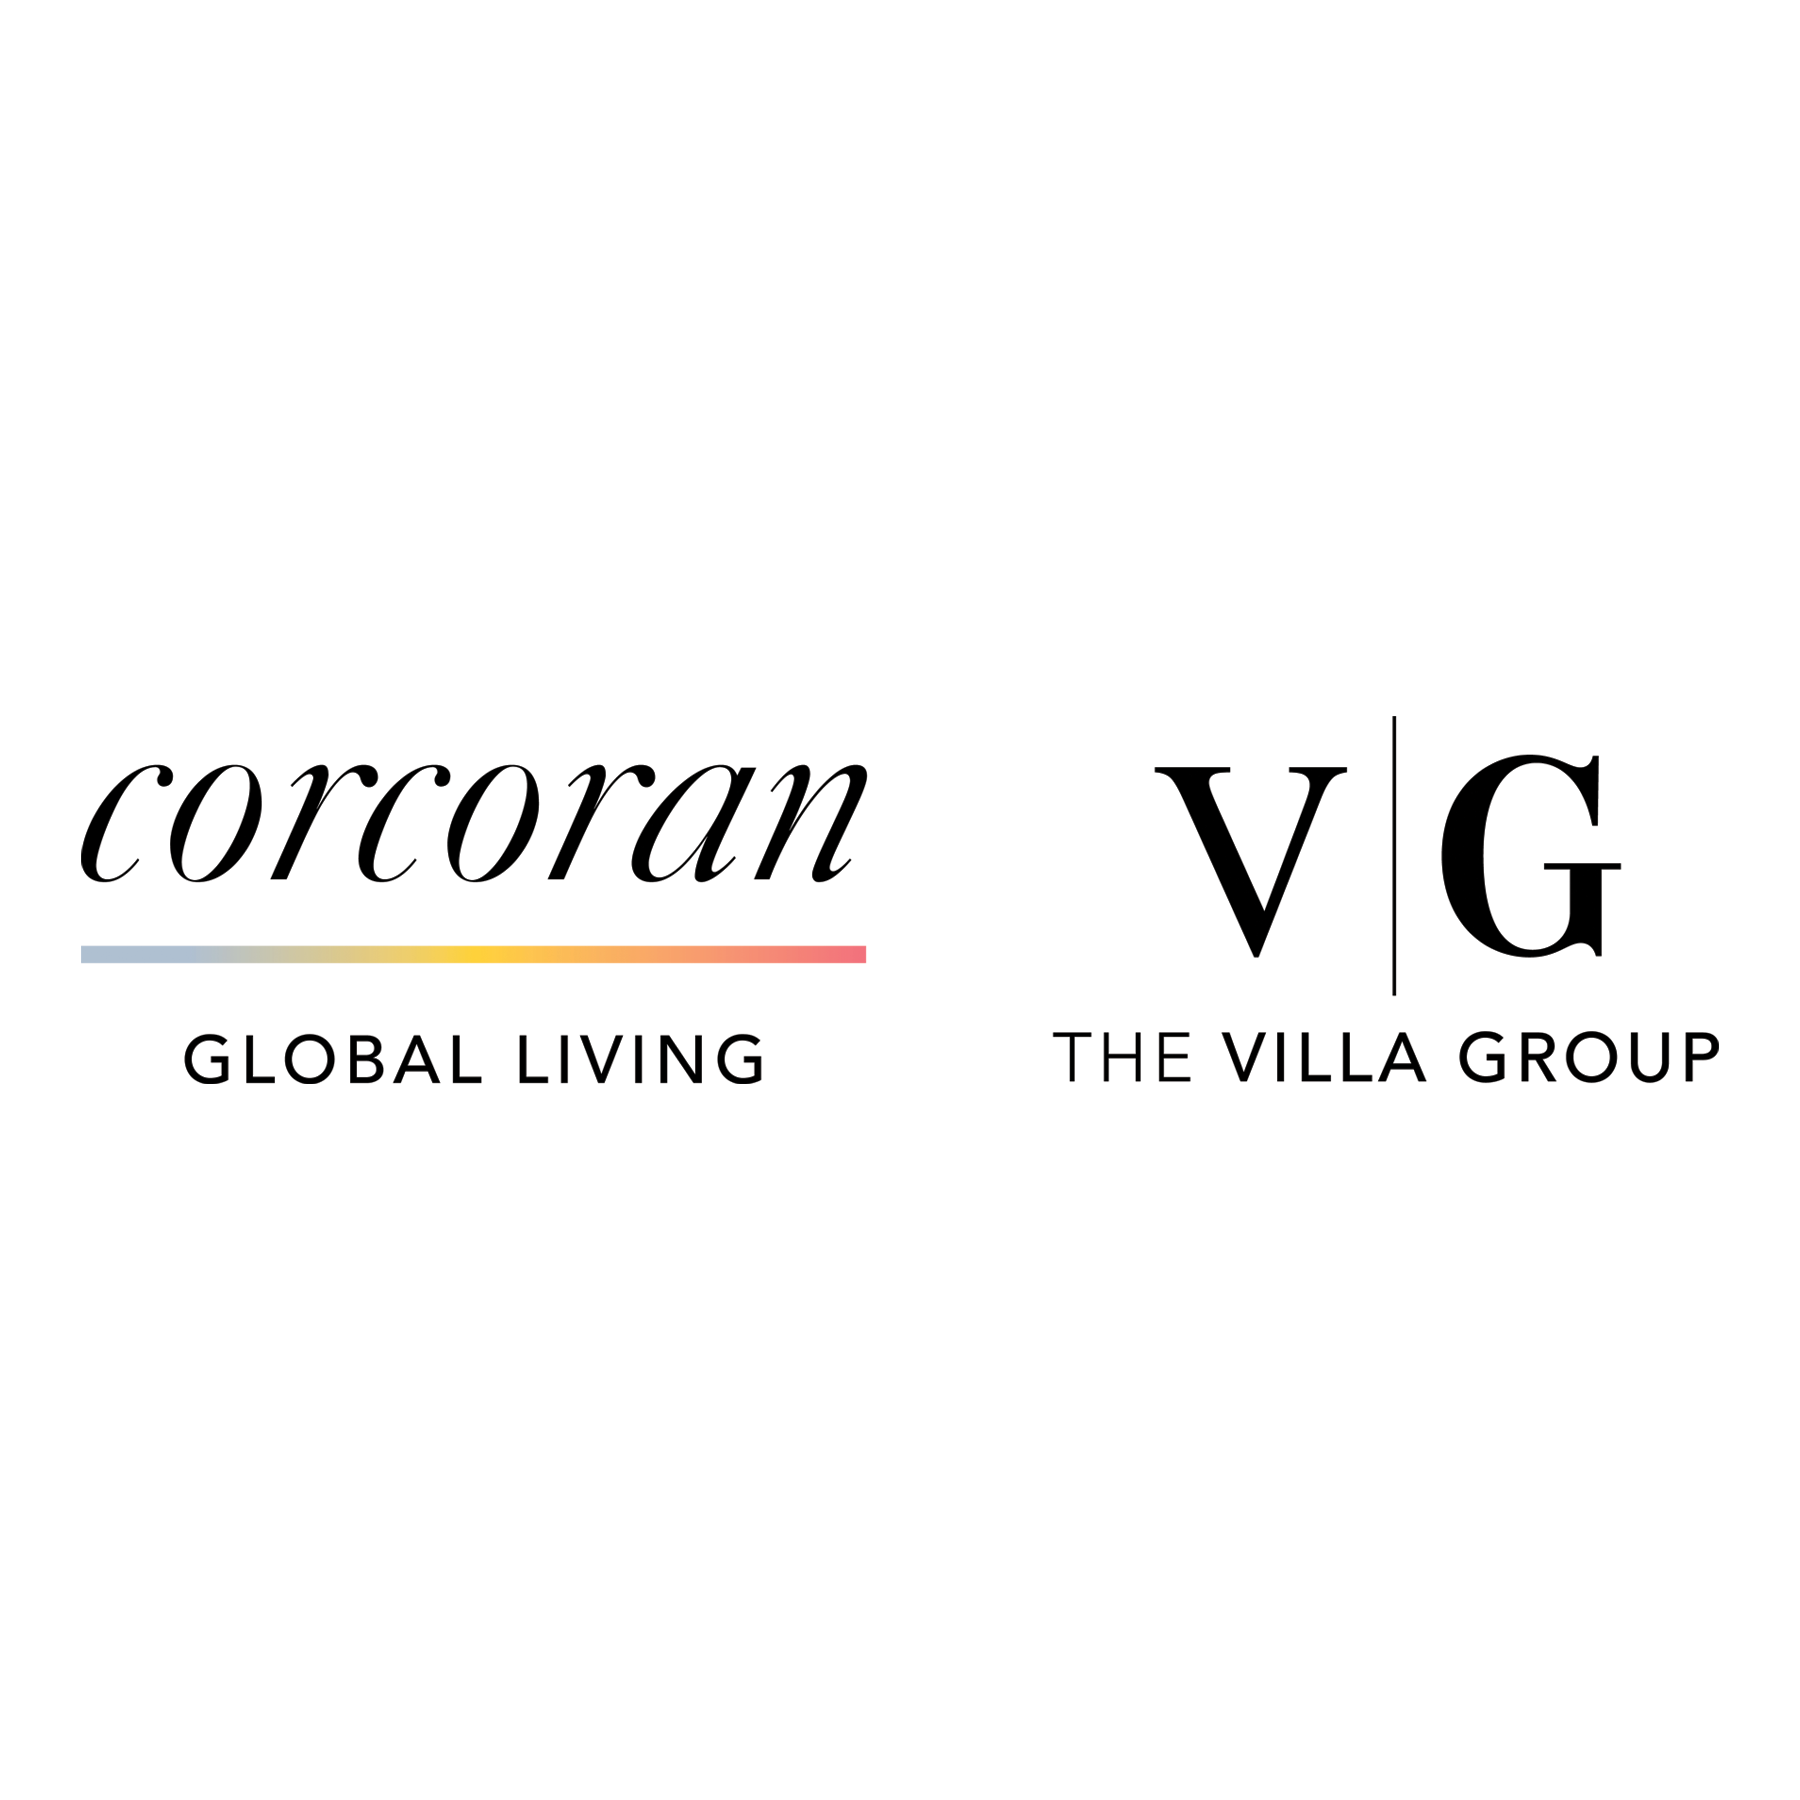 The Villa Group at Corcoran Global Living